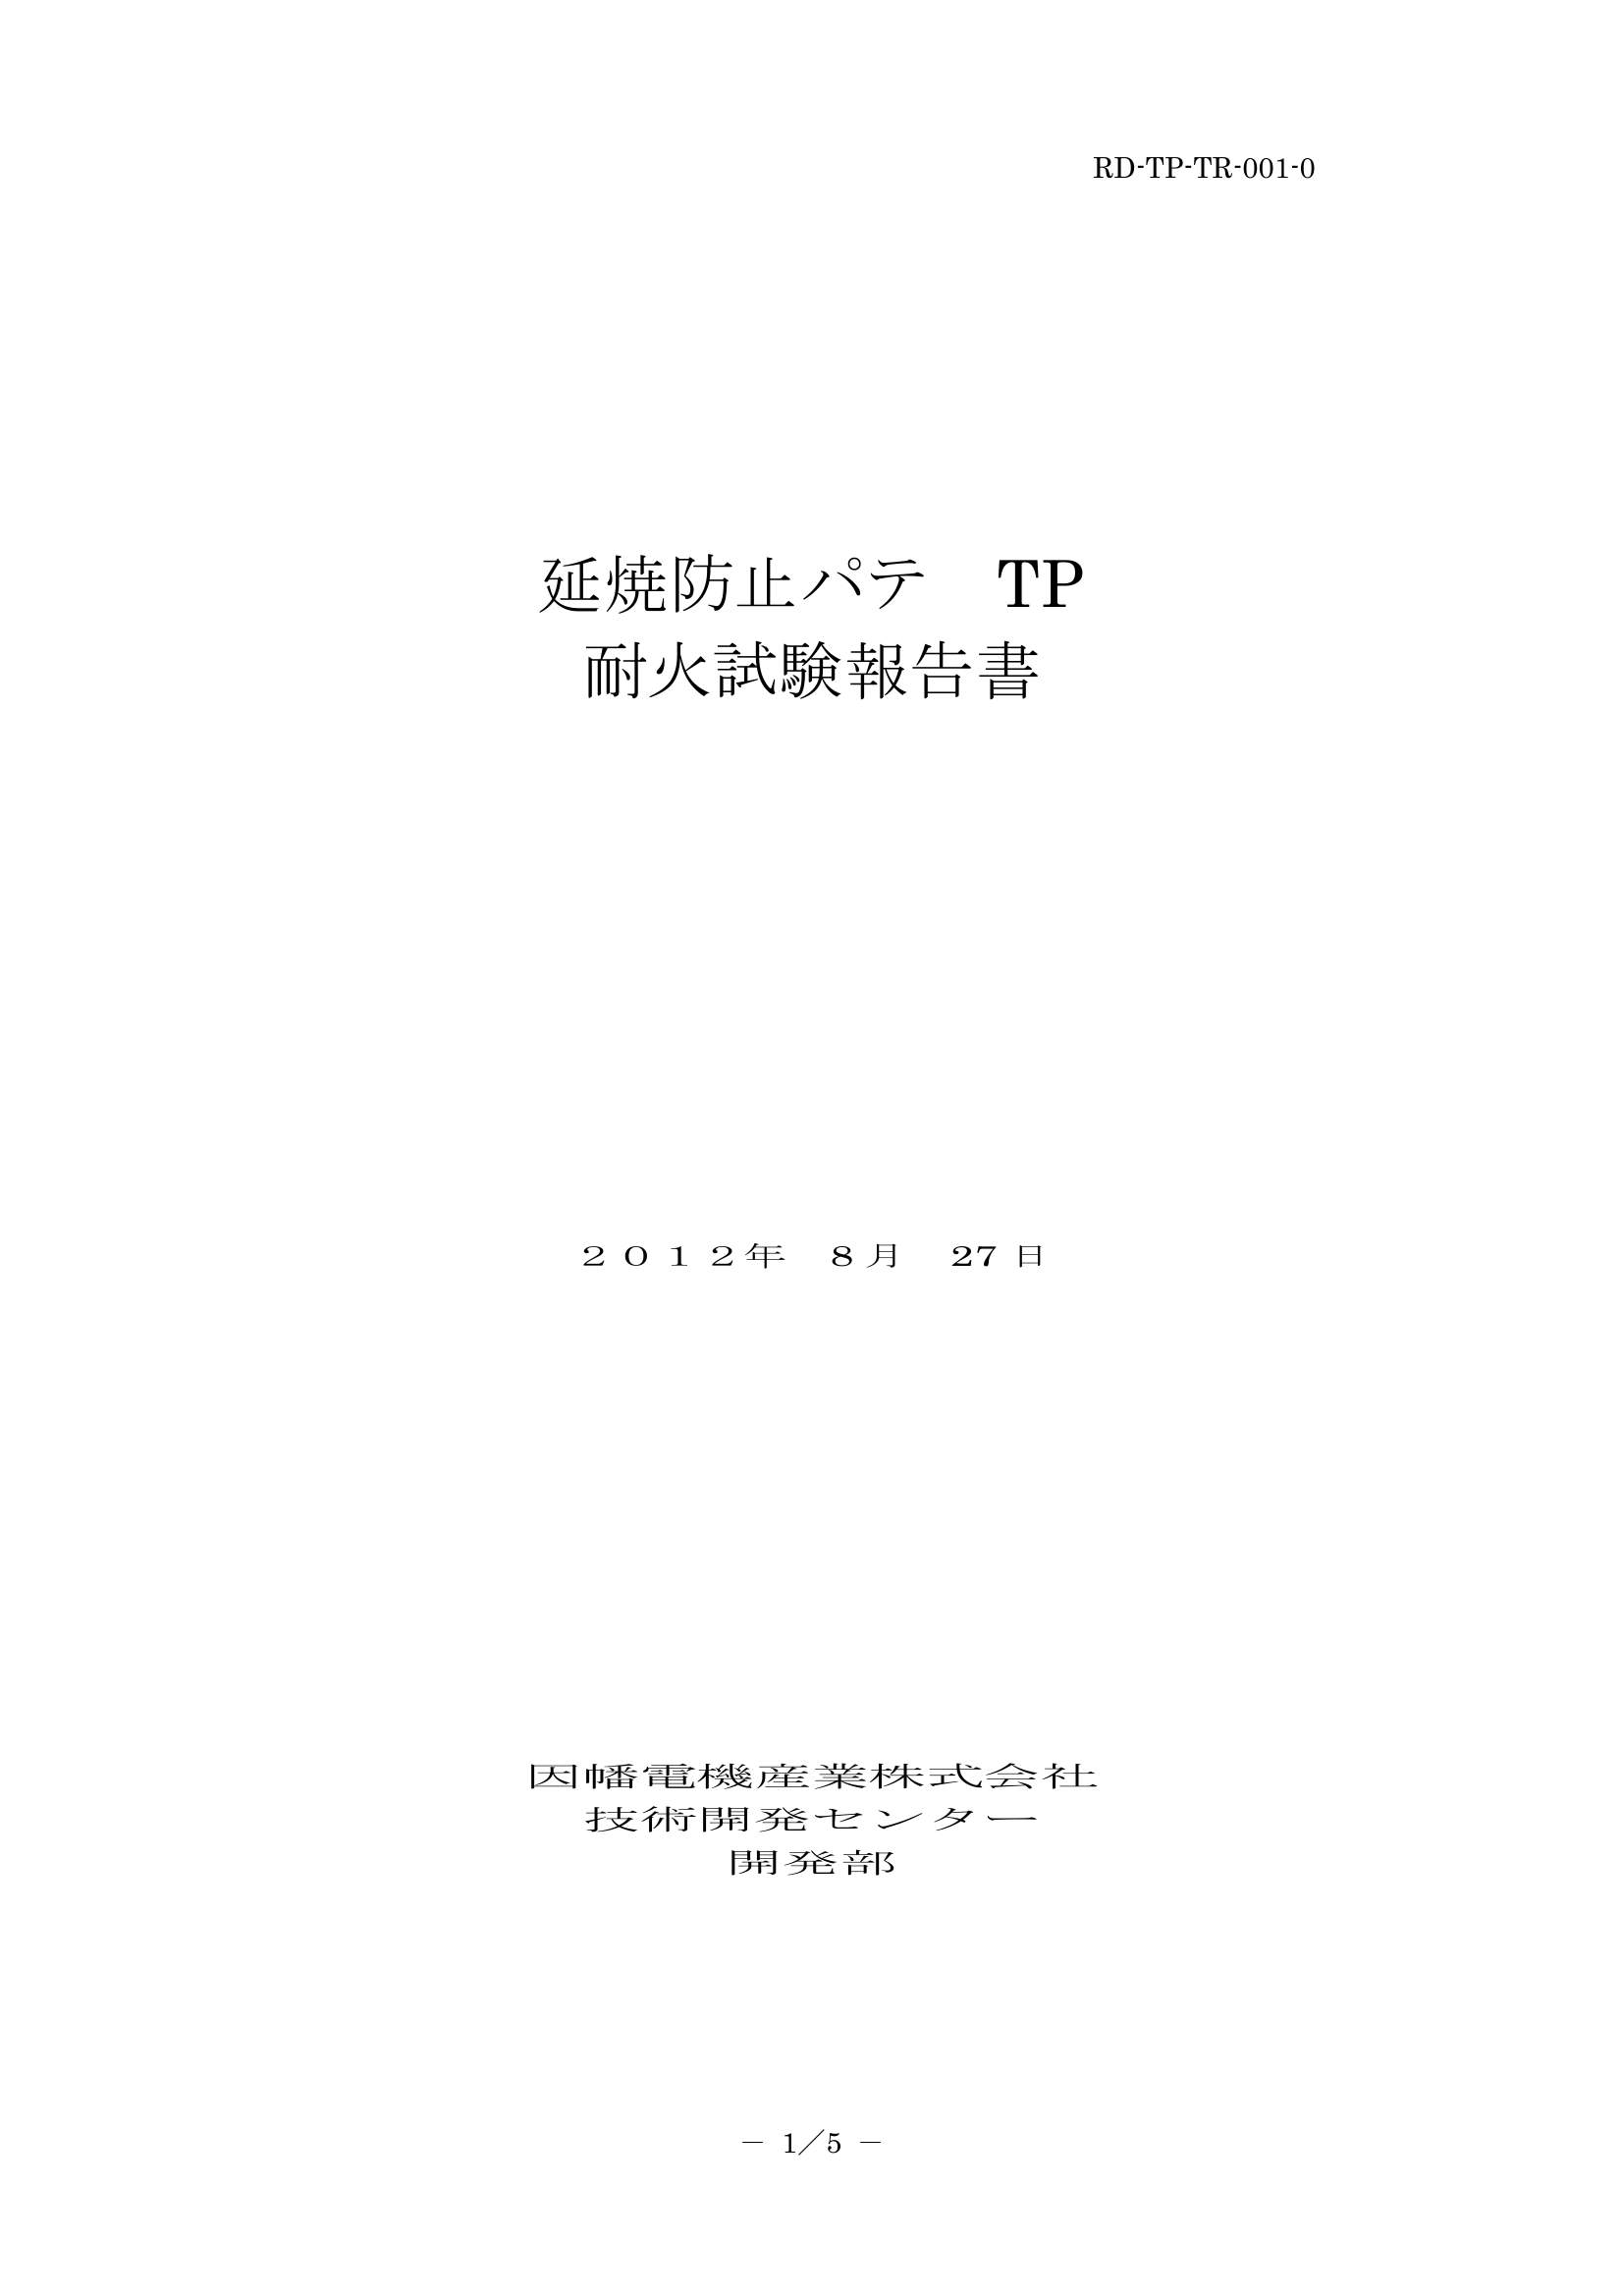 TP_試験報告書_20120924.pdf